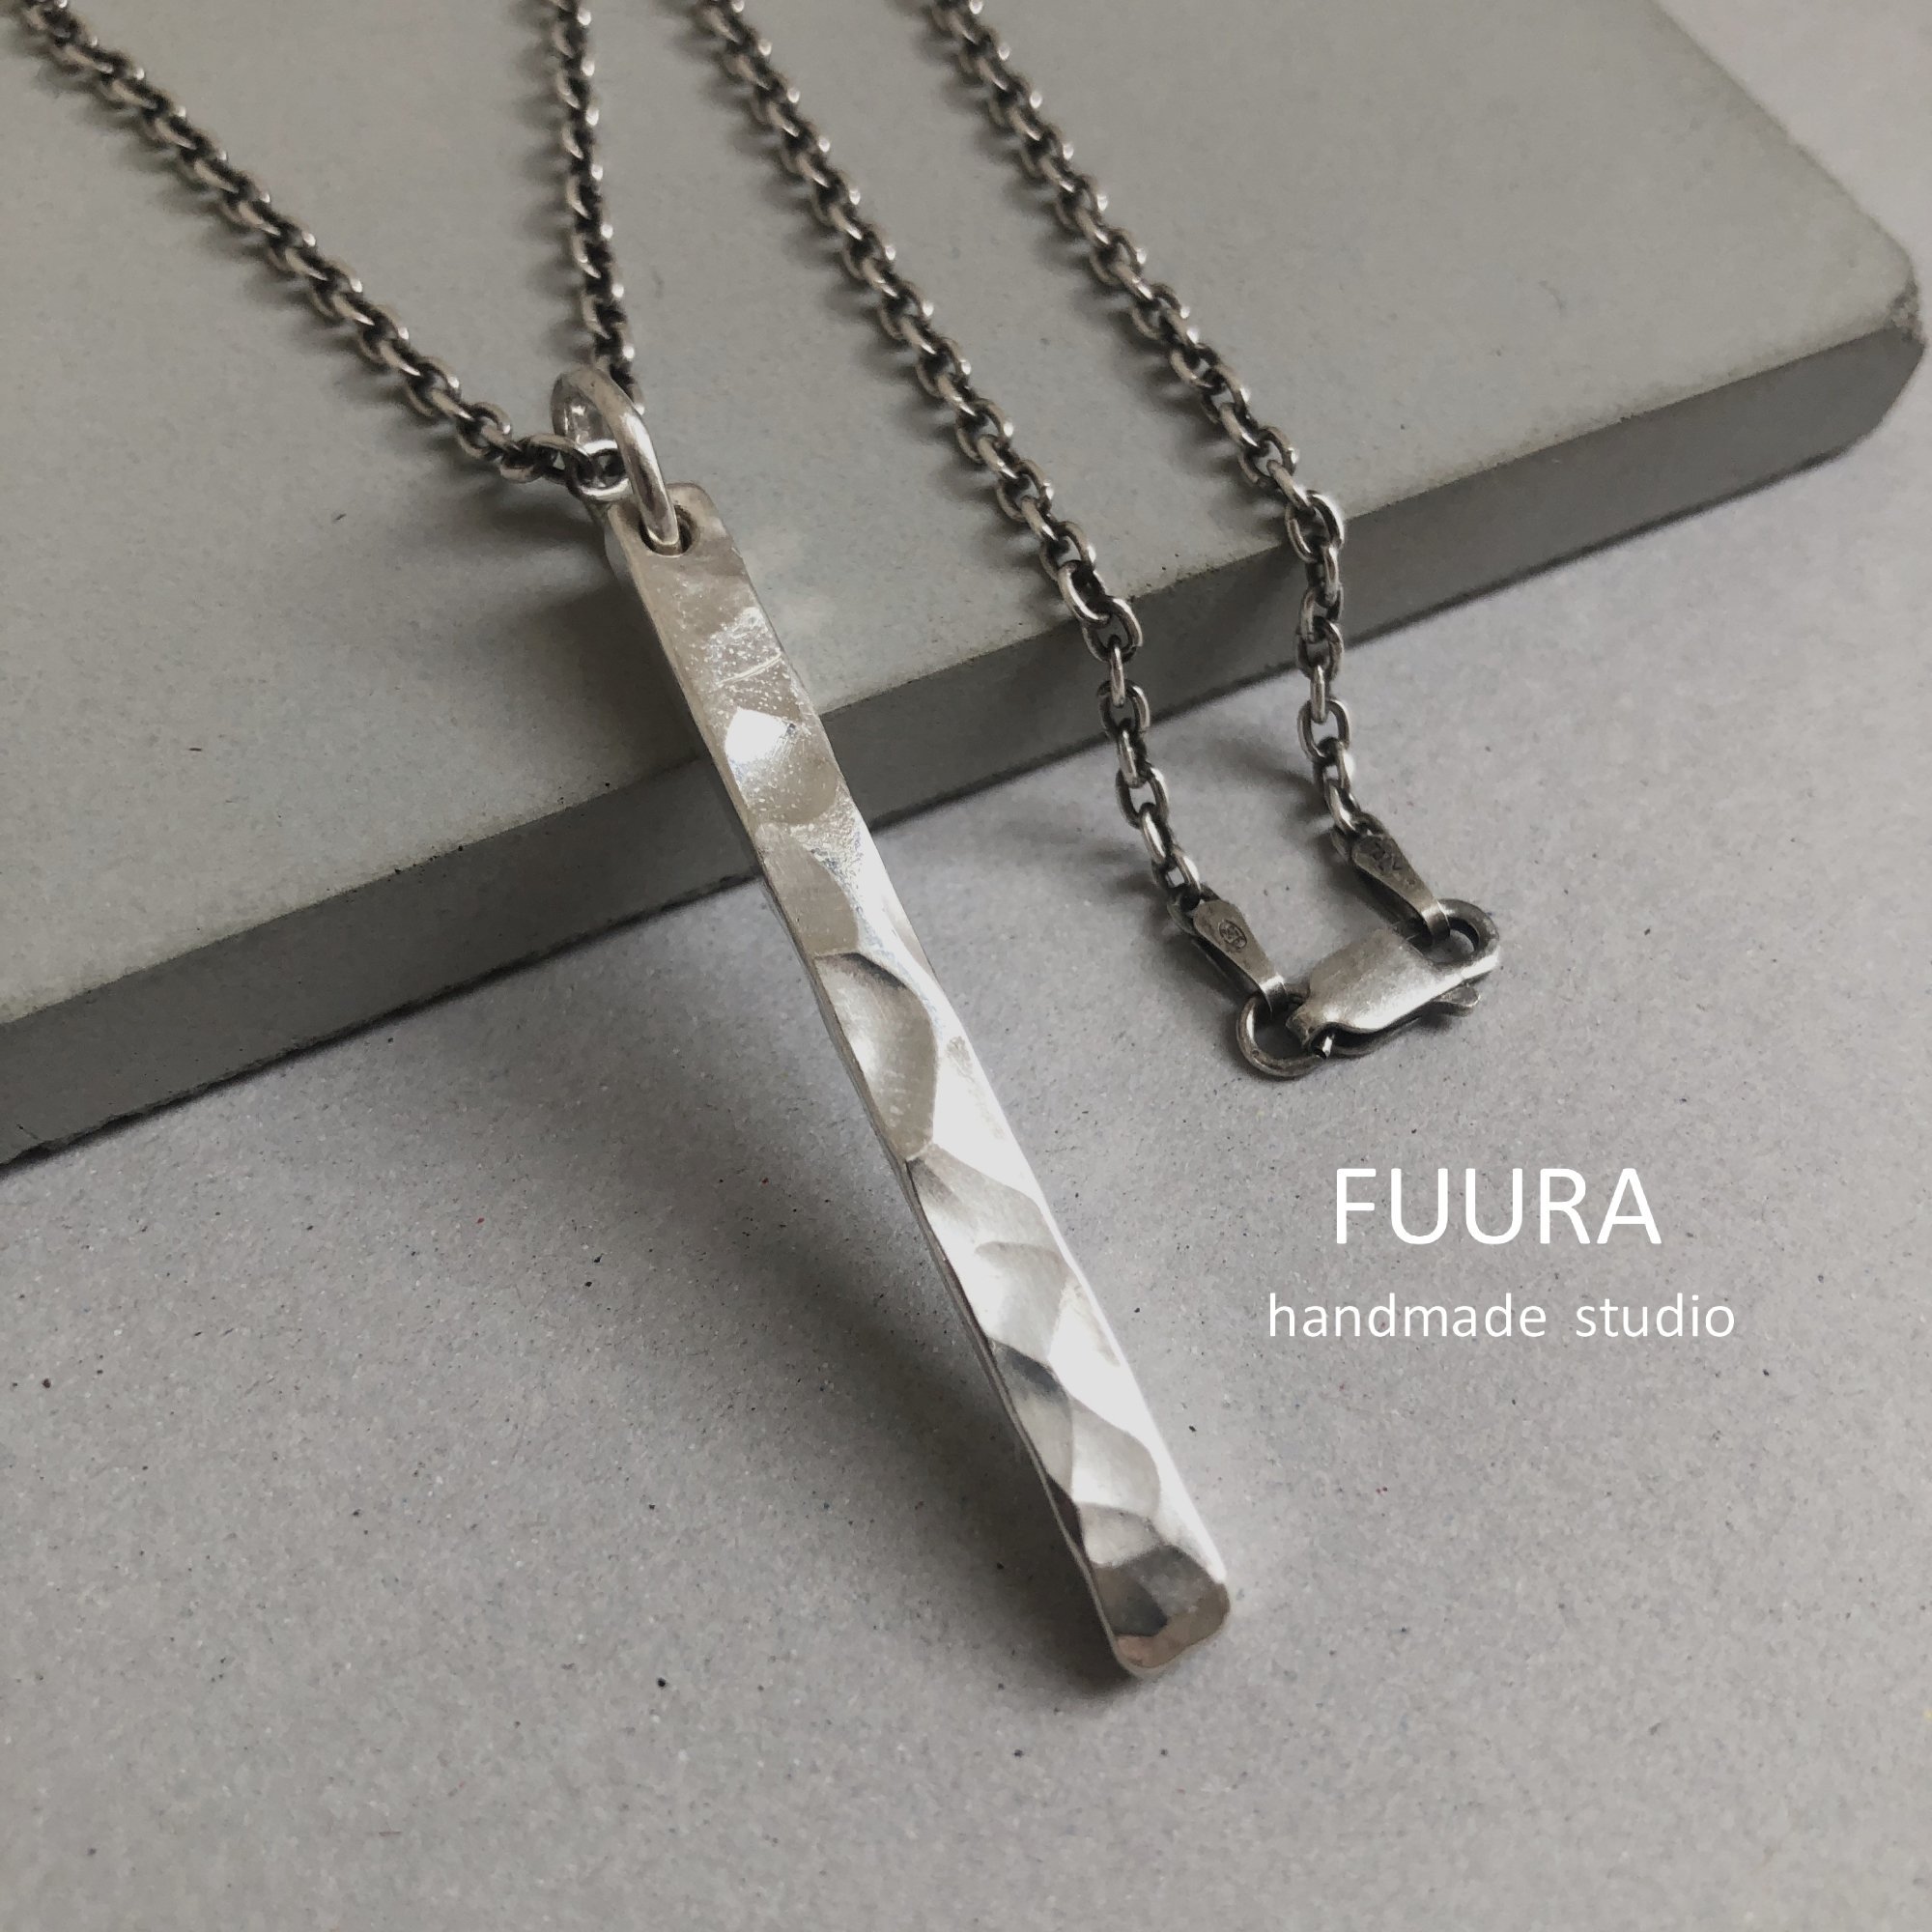 Silver necklace 4mm / シルバーネックレス 4mm - FUURA handmade studio